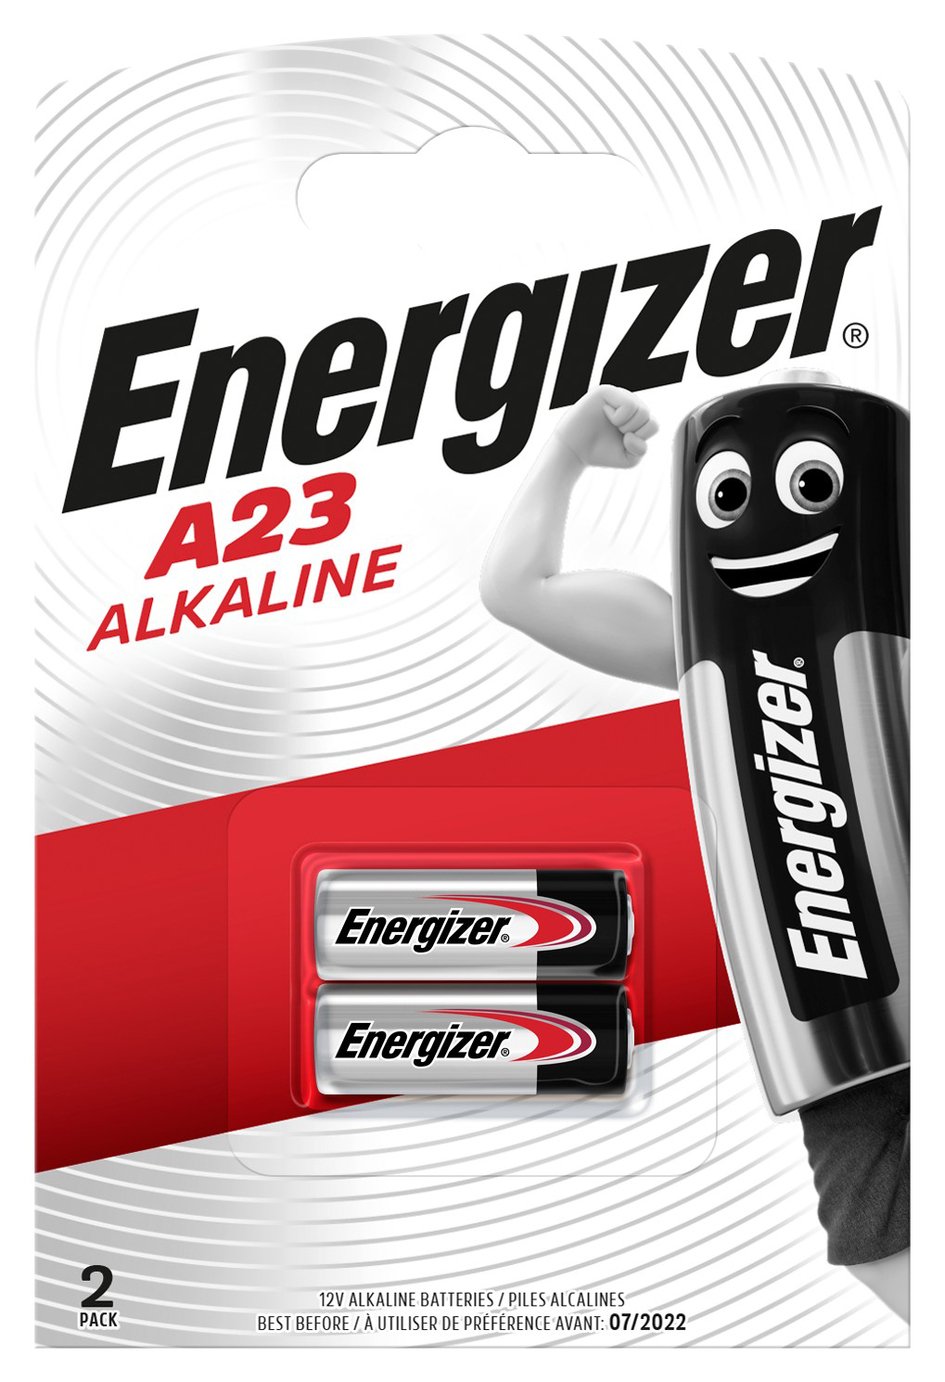 Energizer A23/E23A Batteries Review